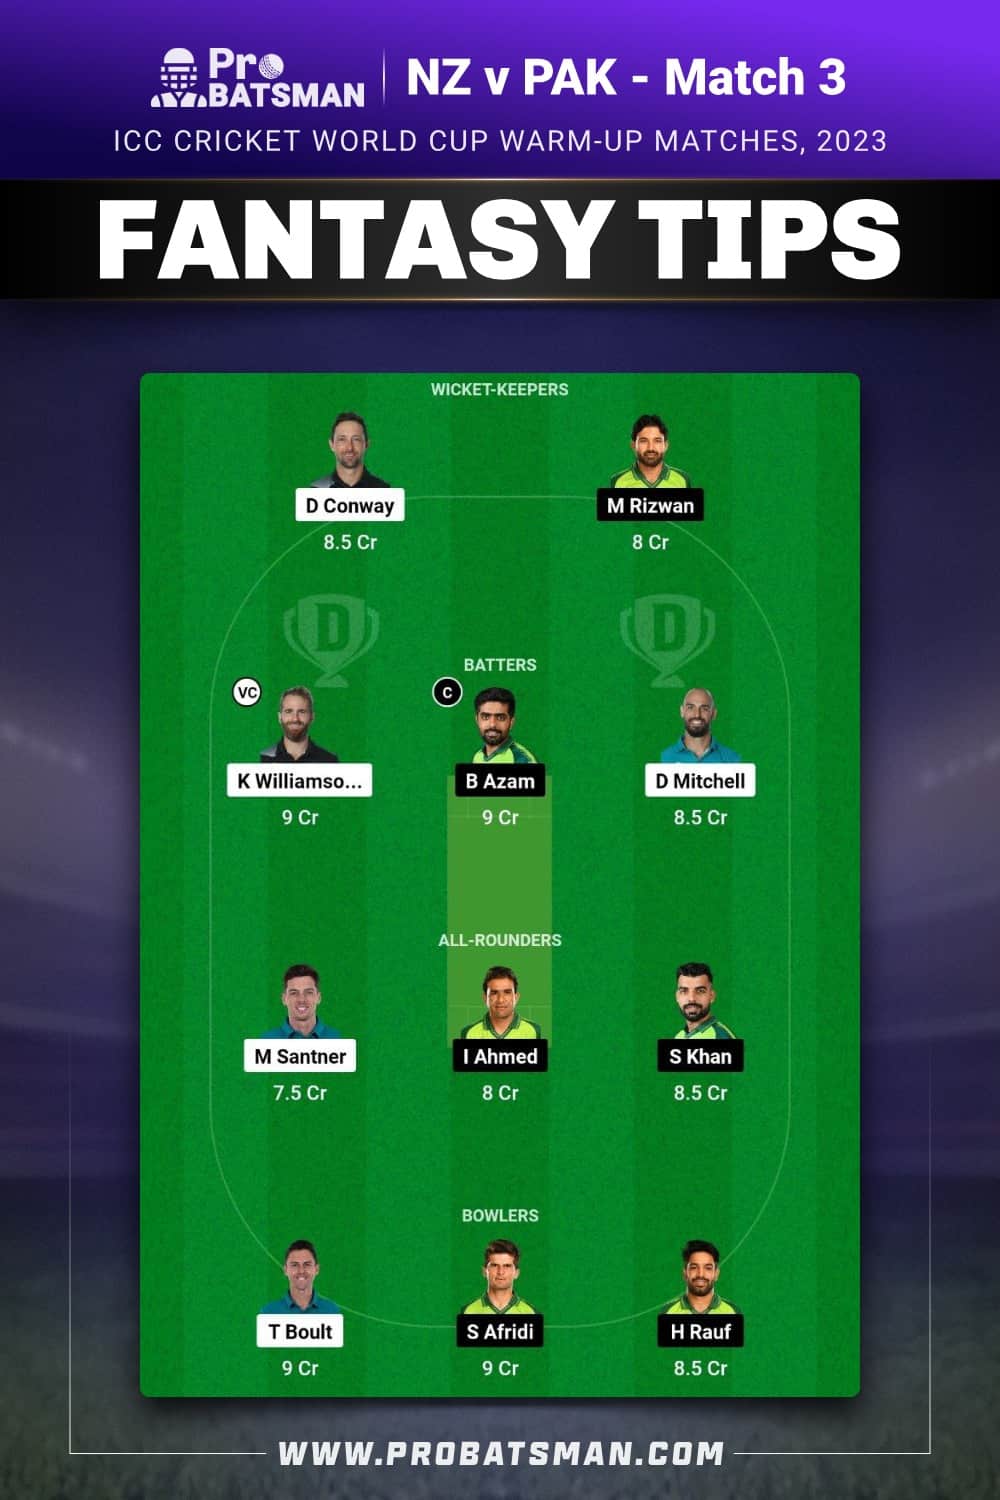 NZ vs PAK Dream11 Prediction - Fantasy Team 1